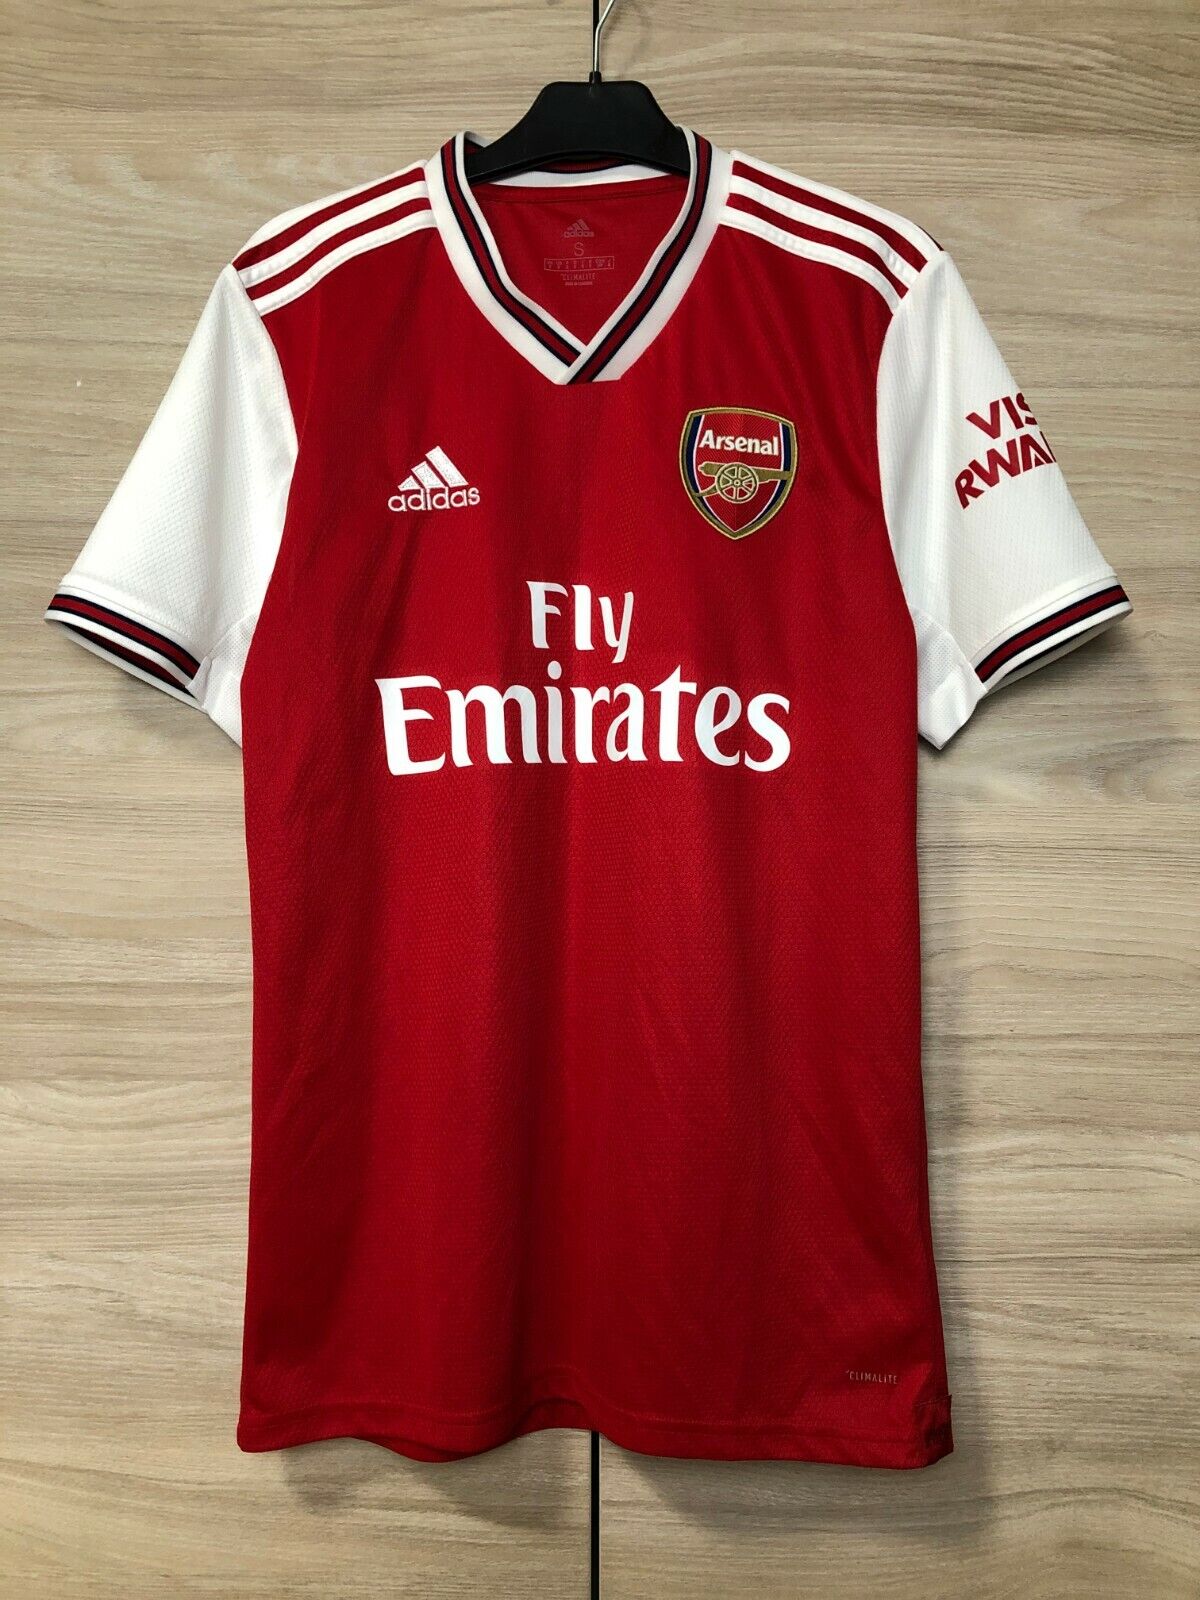 Arsenal London 2019-2020 Home Shirt Soccer Jersey size S | eBay